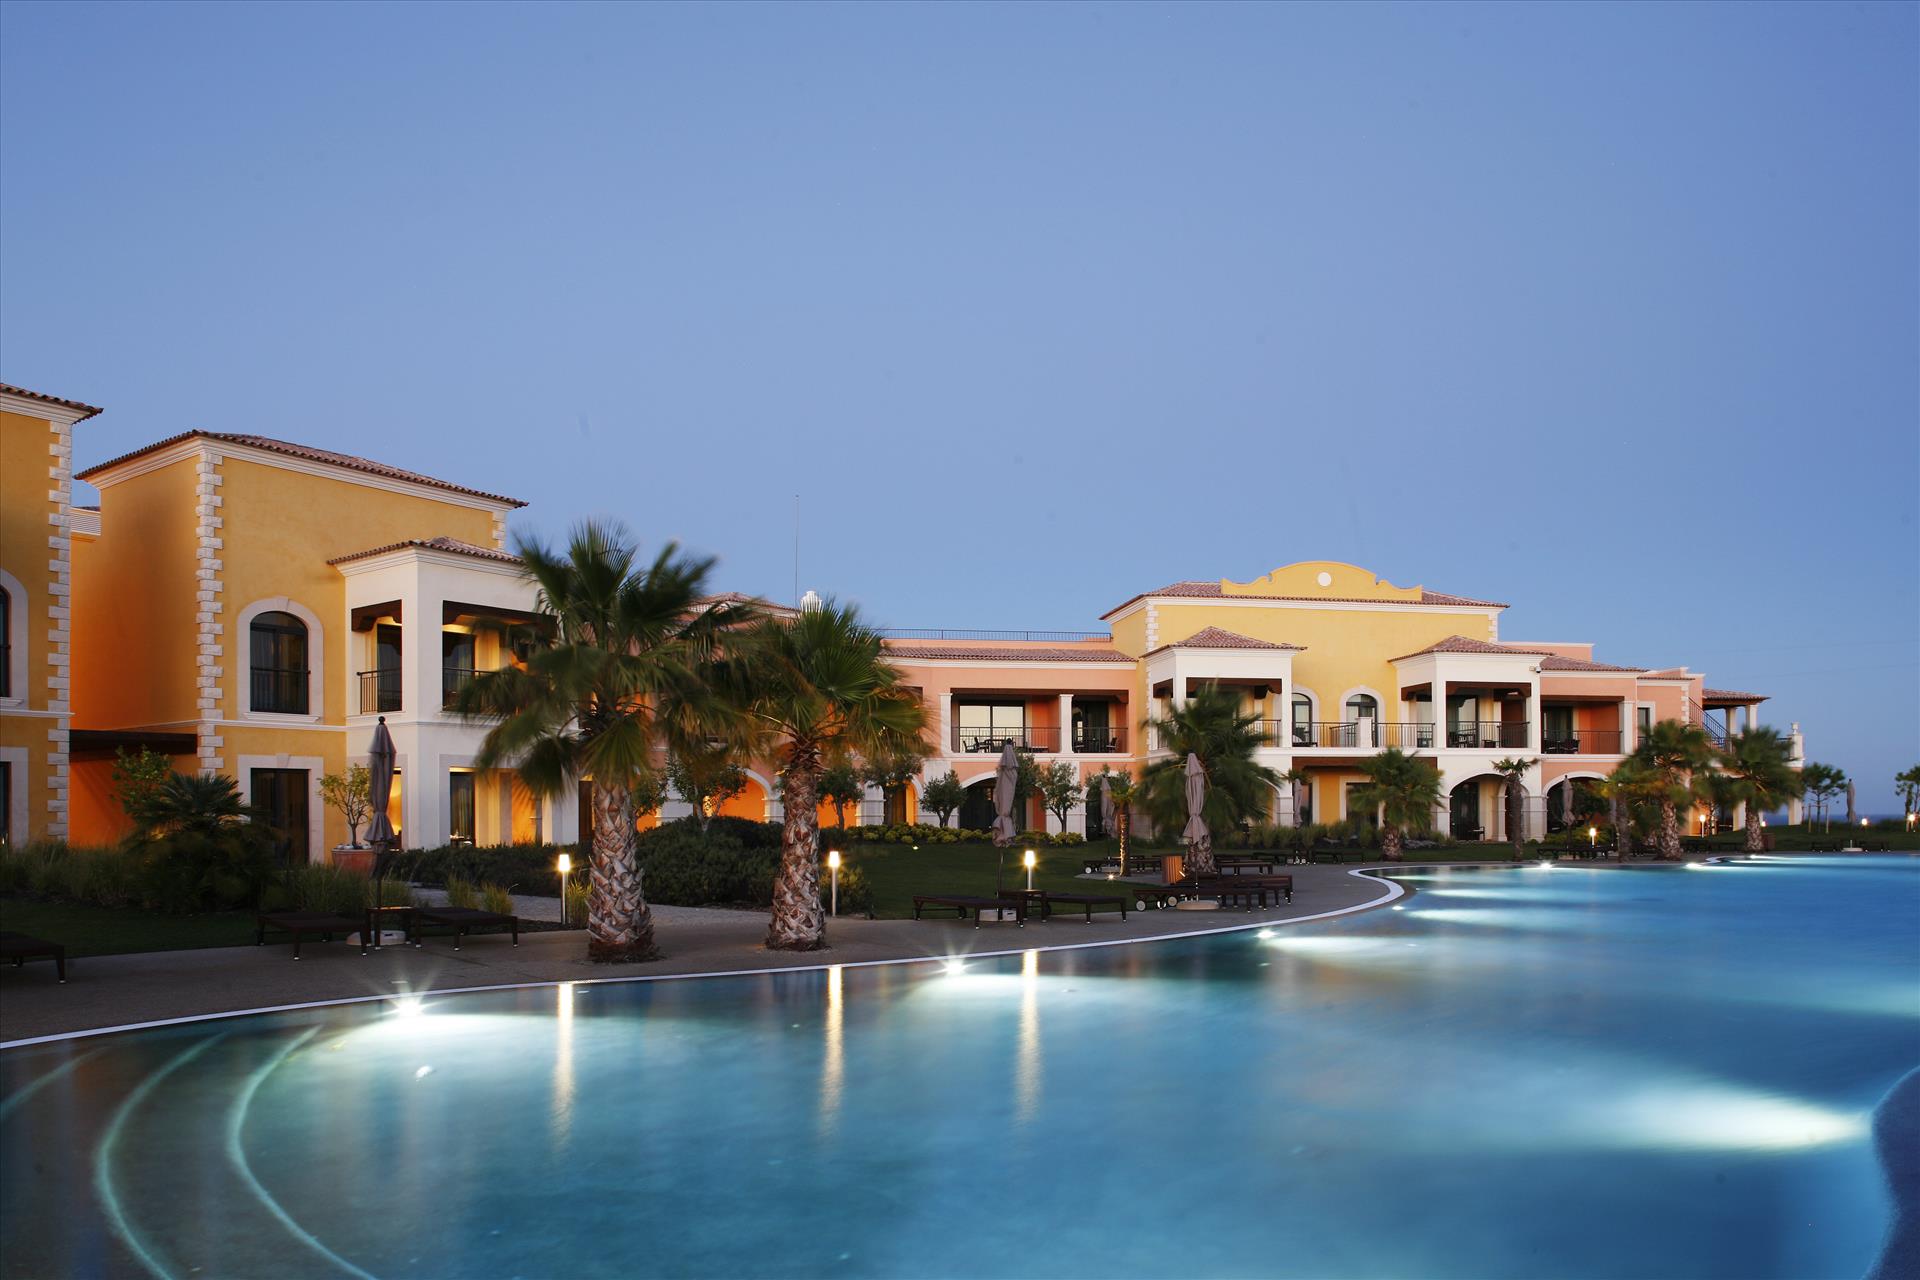 Hotel Cascade Wellness Resort, Lagos, Portugal 